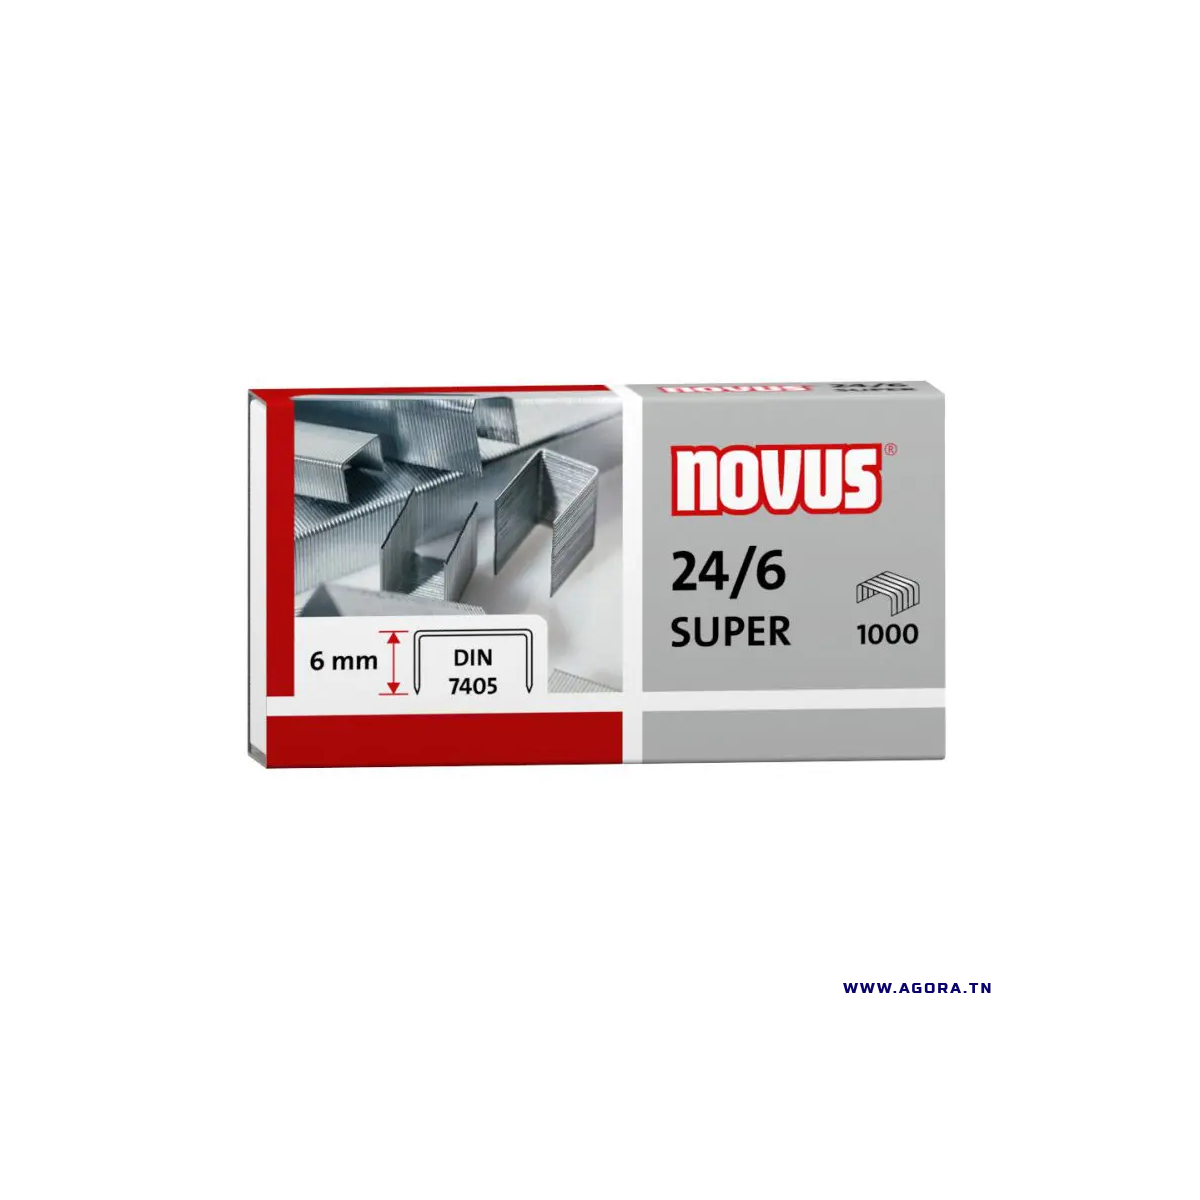 AGRAFES NOVUS 24/6 PAQUET DE 1000  | Agora.tn